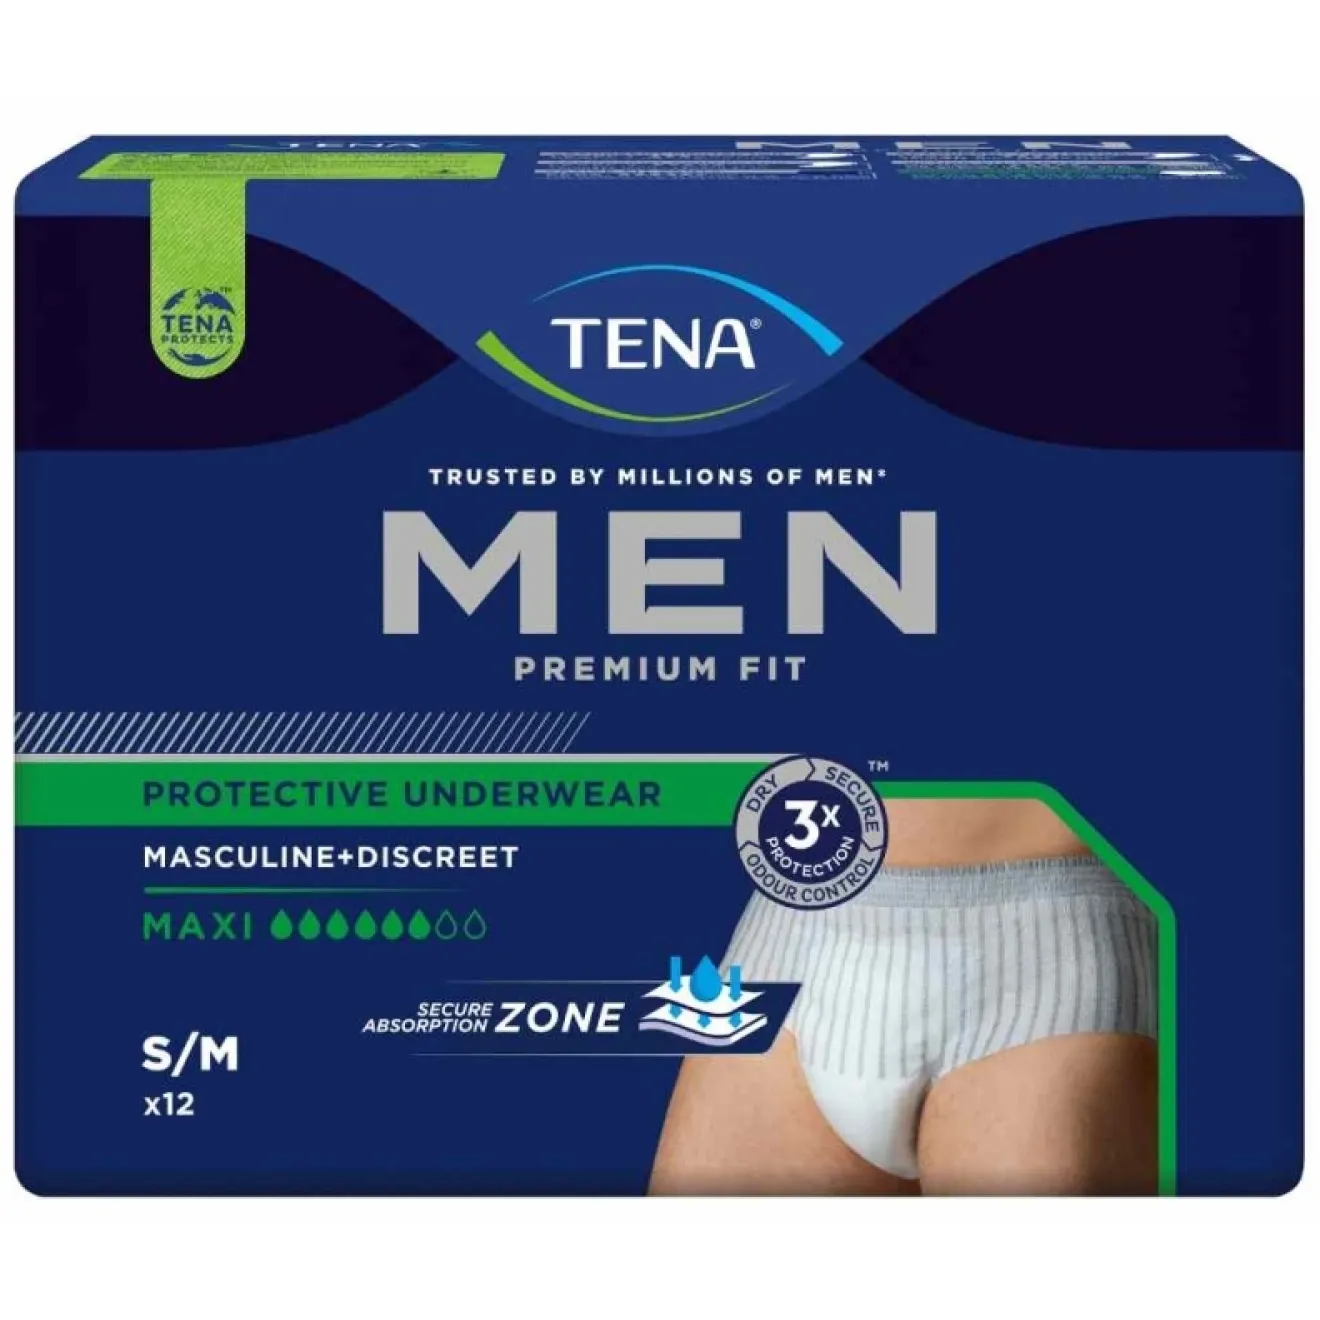 TENA MEN Premium Fit Inkontinenz Pants maxi S/M 4x12 ST